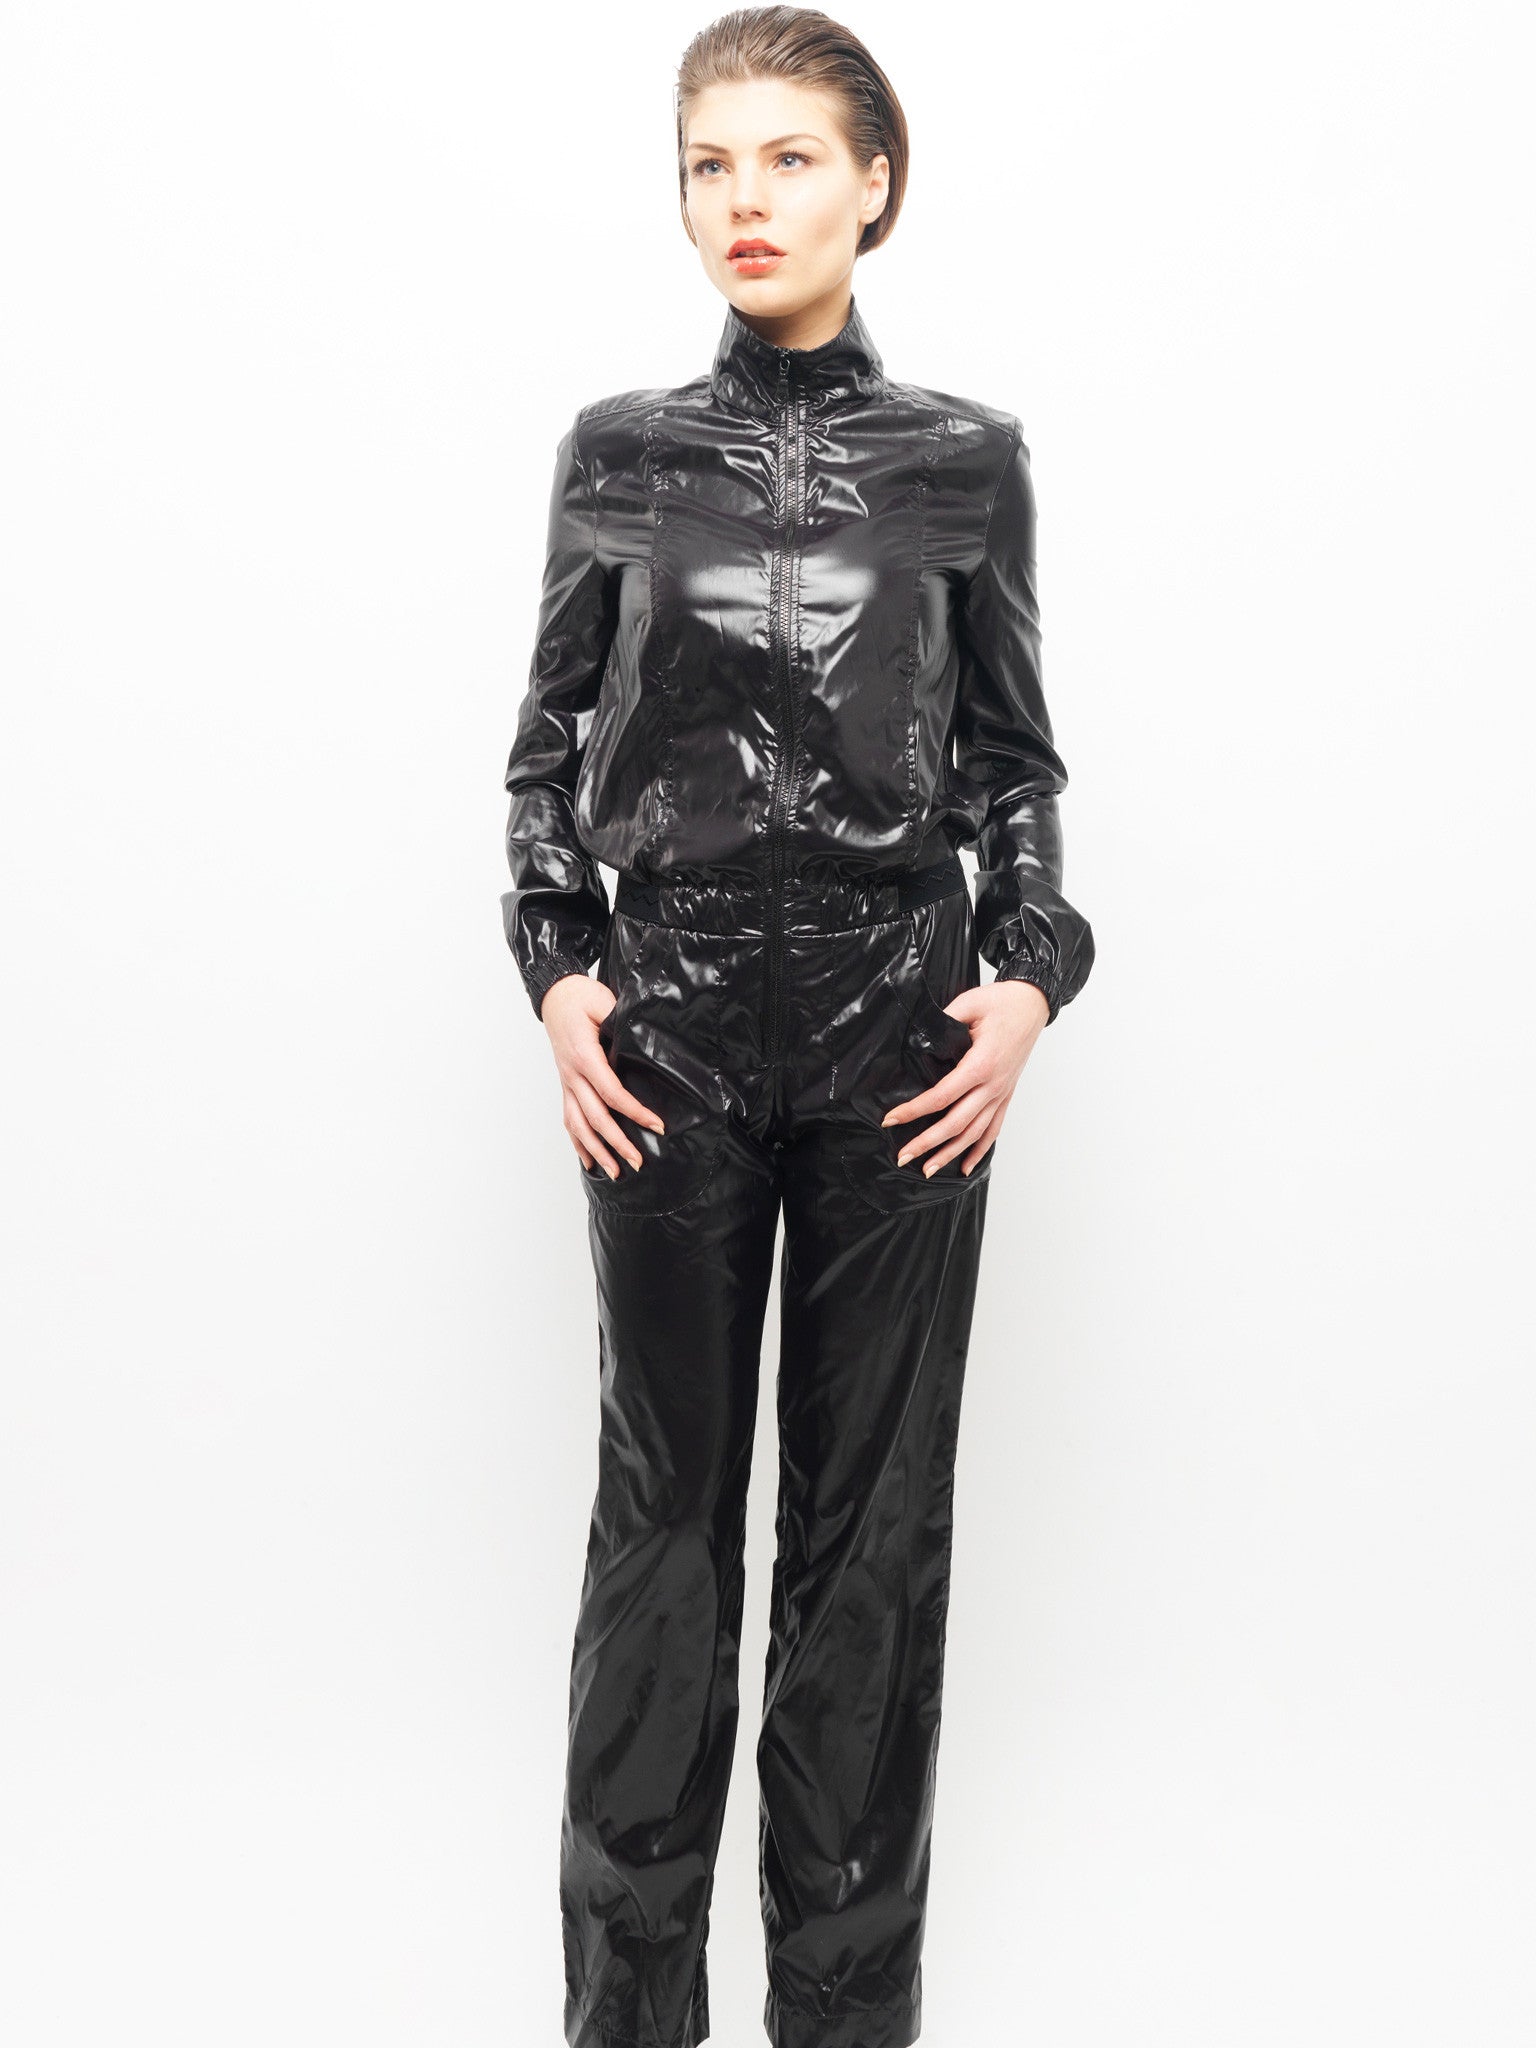 Samantha Sotos - AW12/13 womenswear ready to wear collection ...